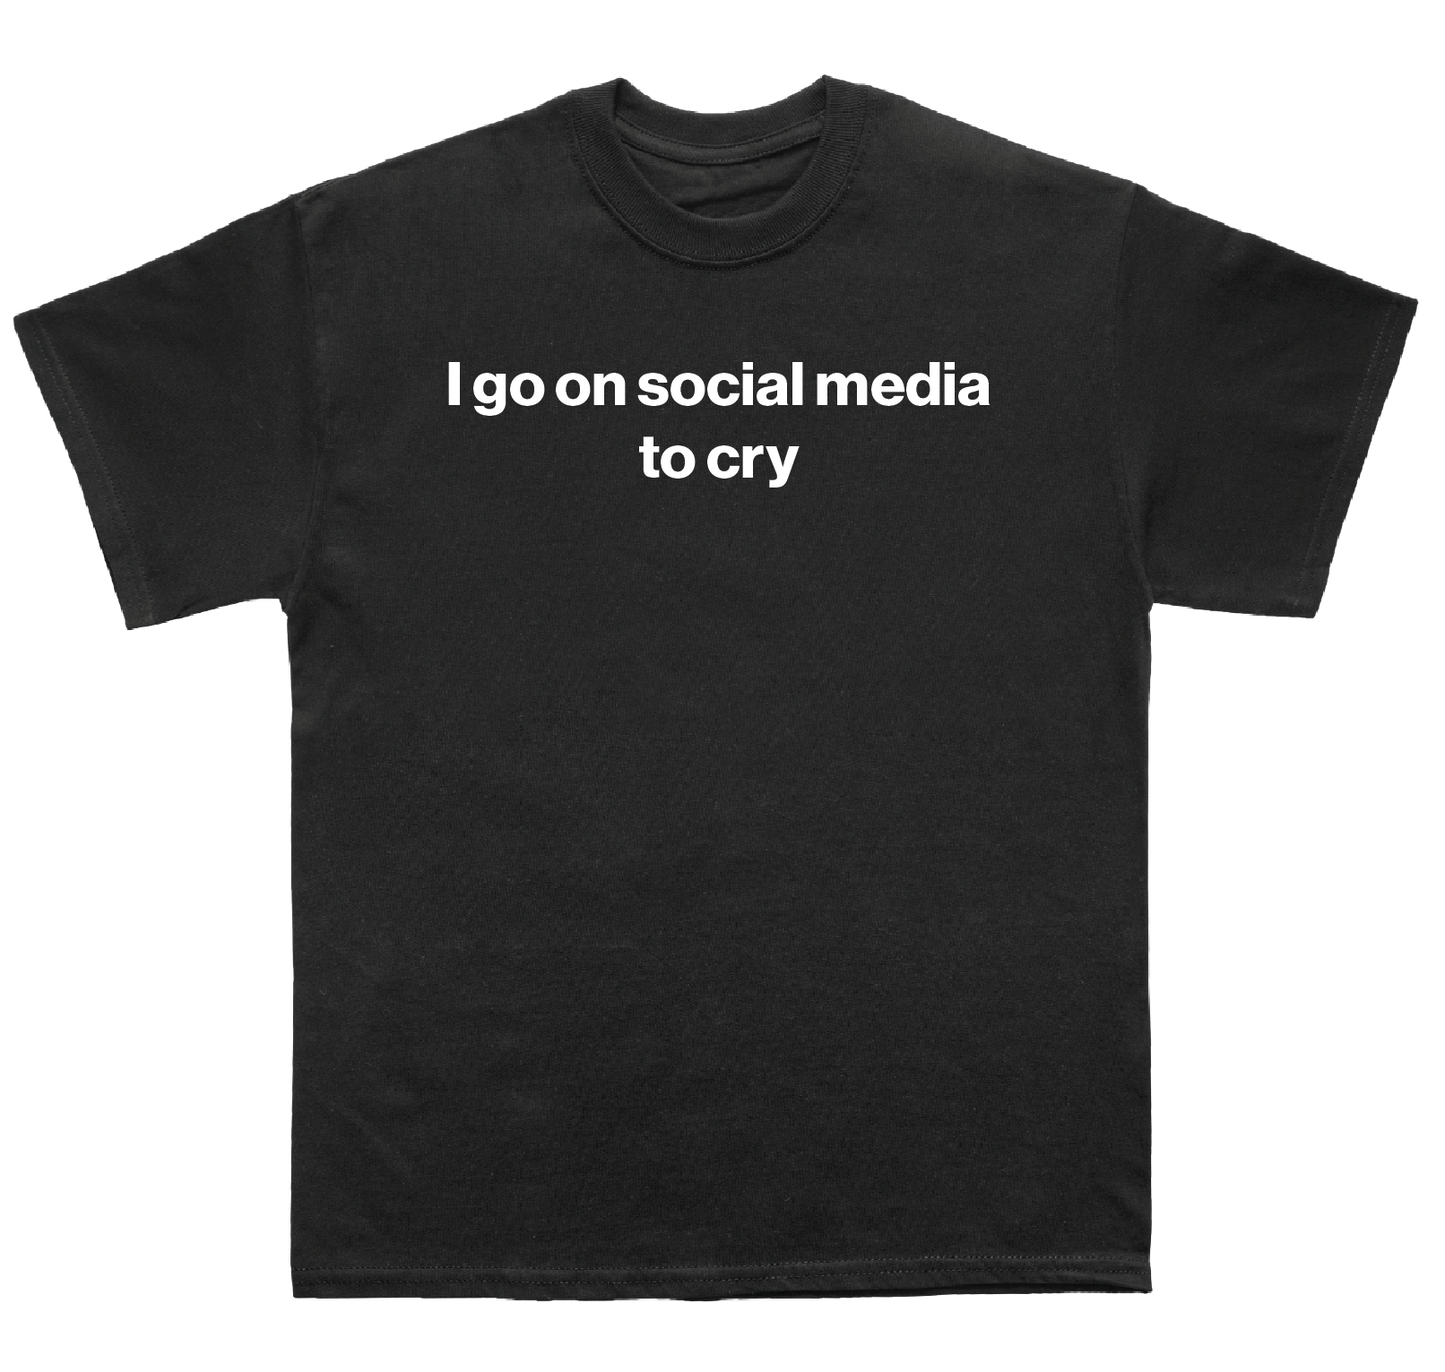 I go on social media to cry shirt